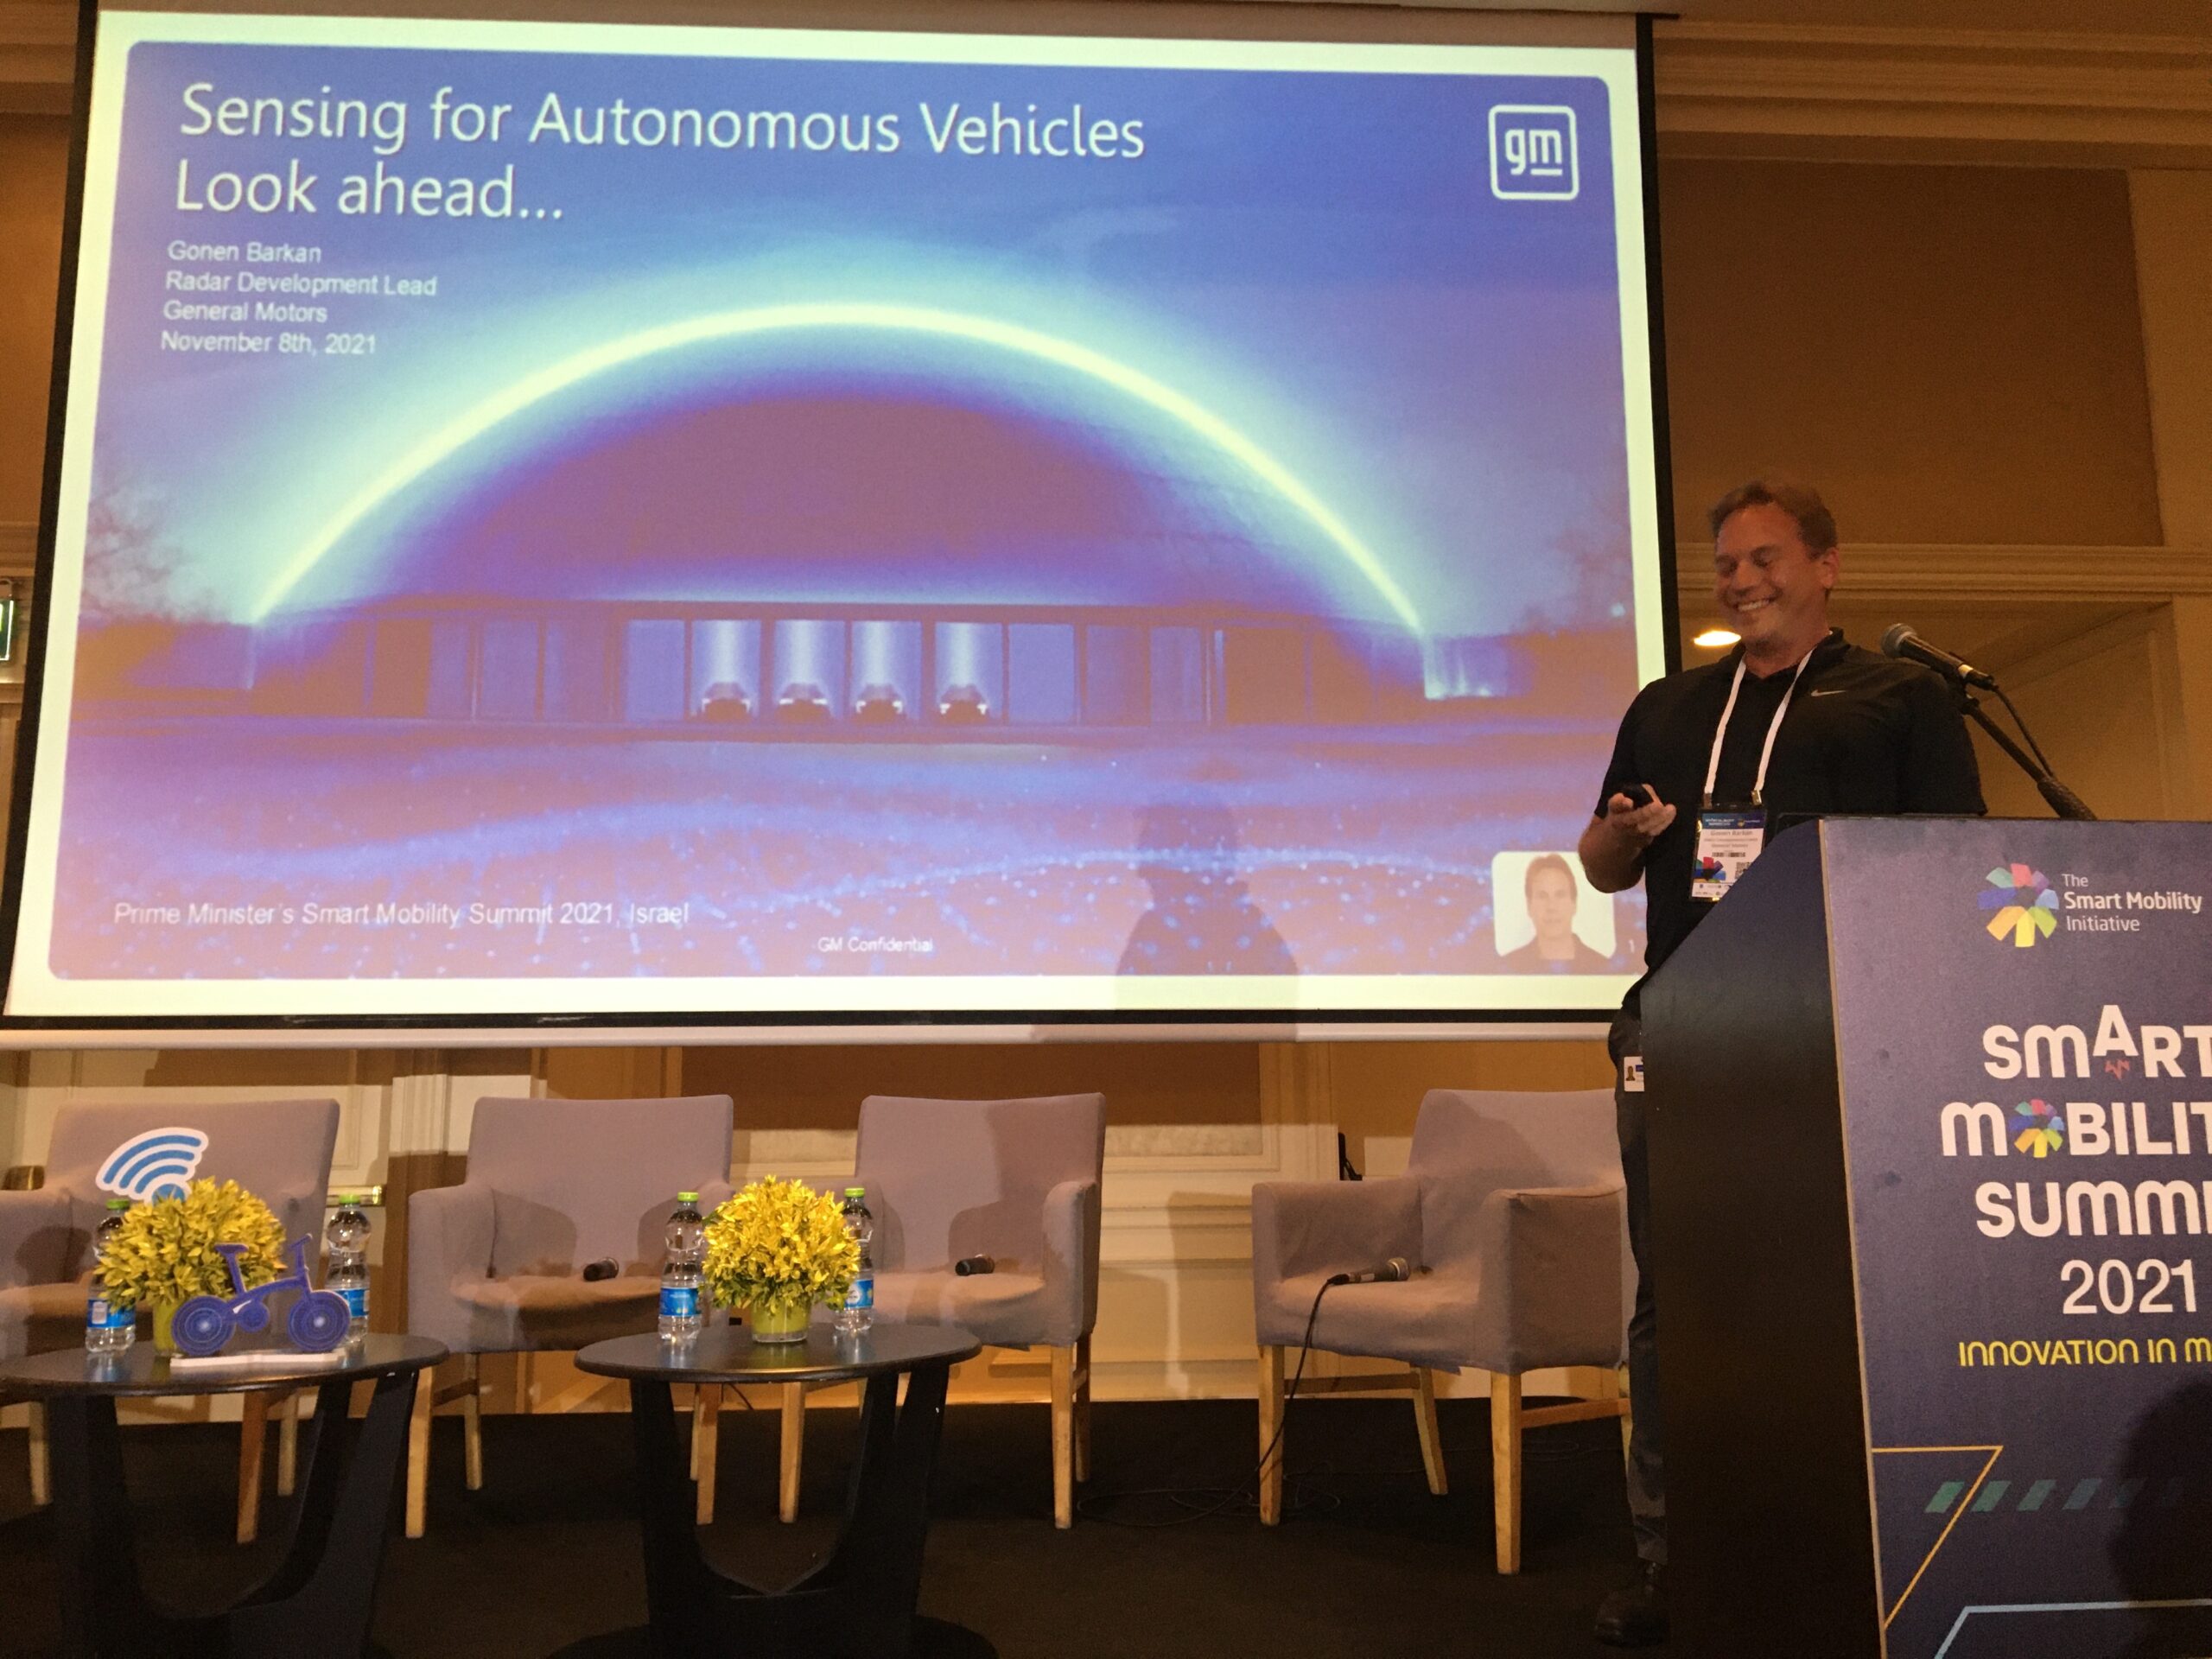 ISTRC Academic Workshop “Look Ahead - Sensing for Autonomous Vehicles”